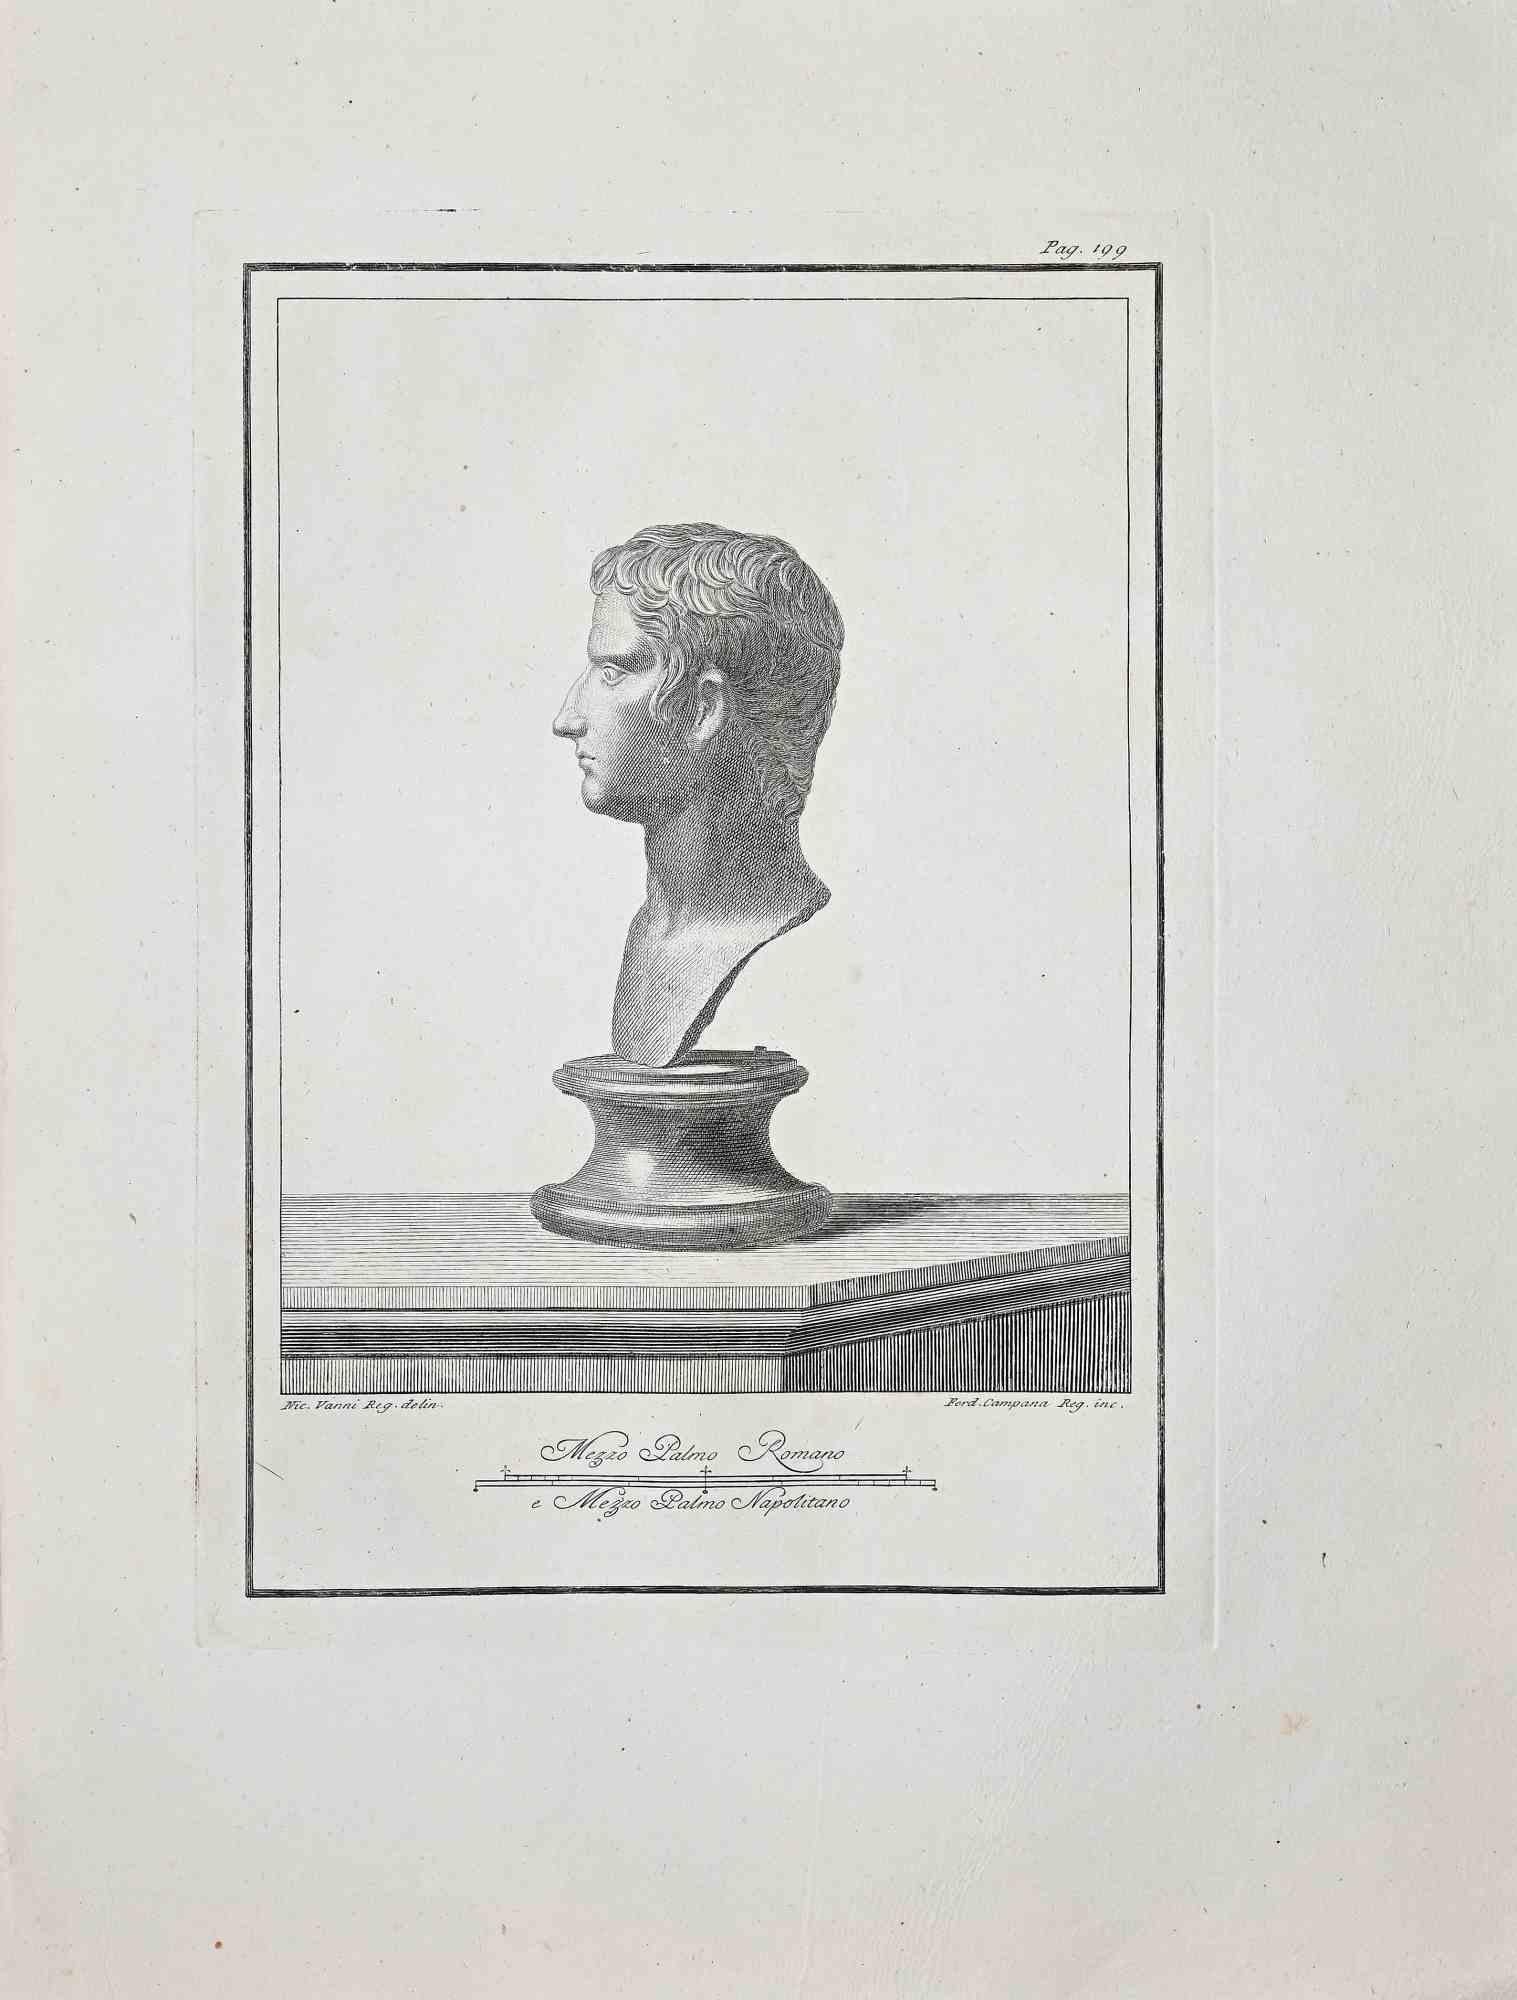 Figurative Print Unknown - Buste romain ancien - gravure d'origine  XVIIIe siècle